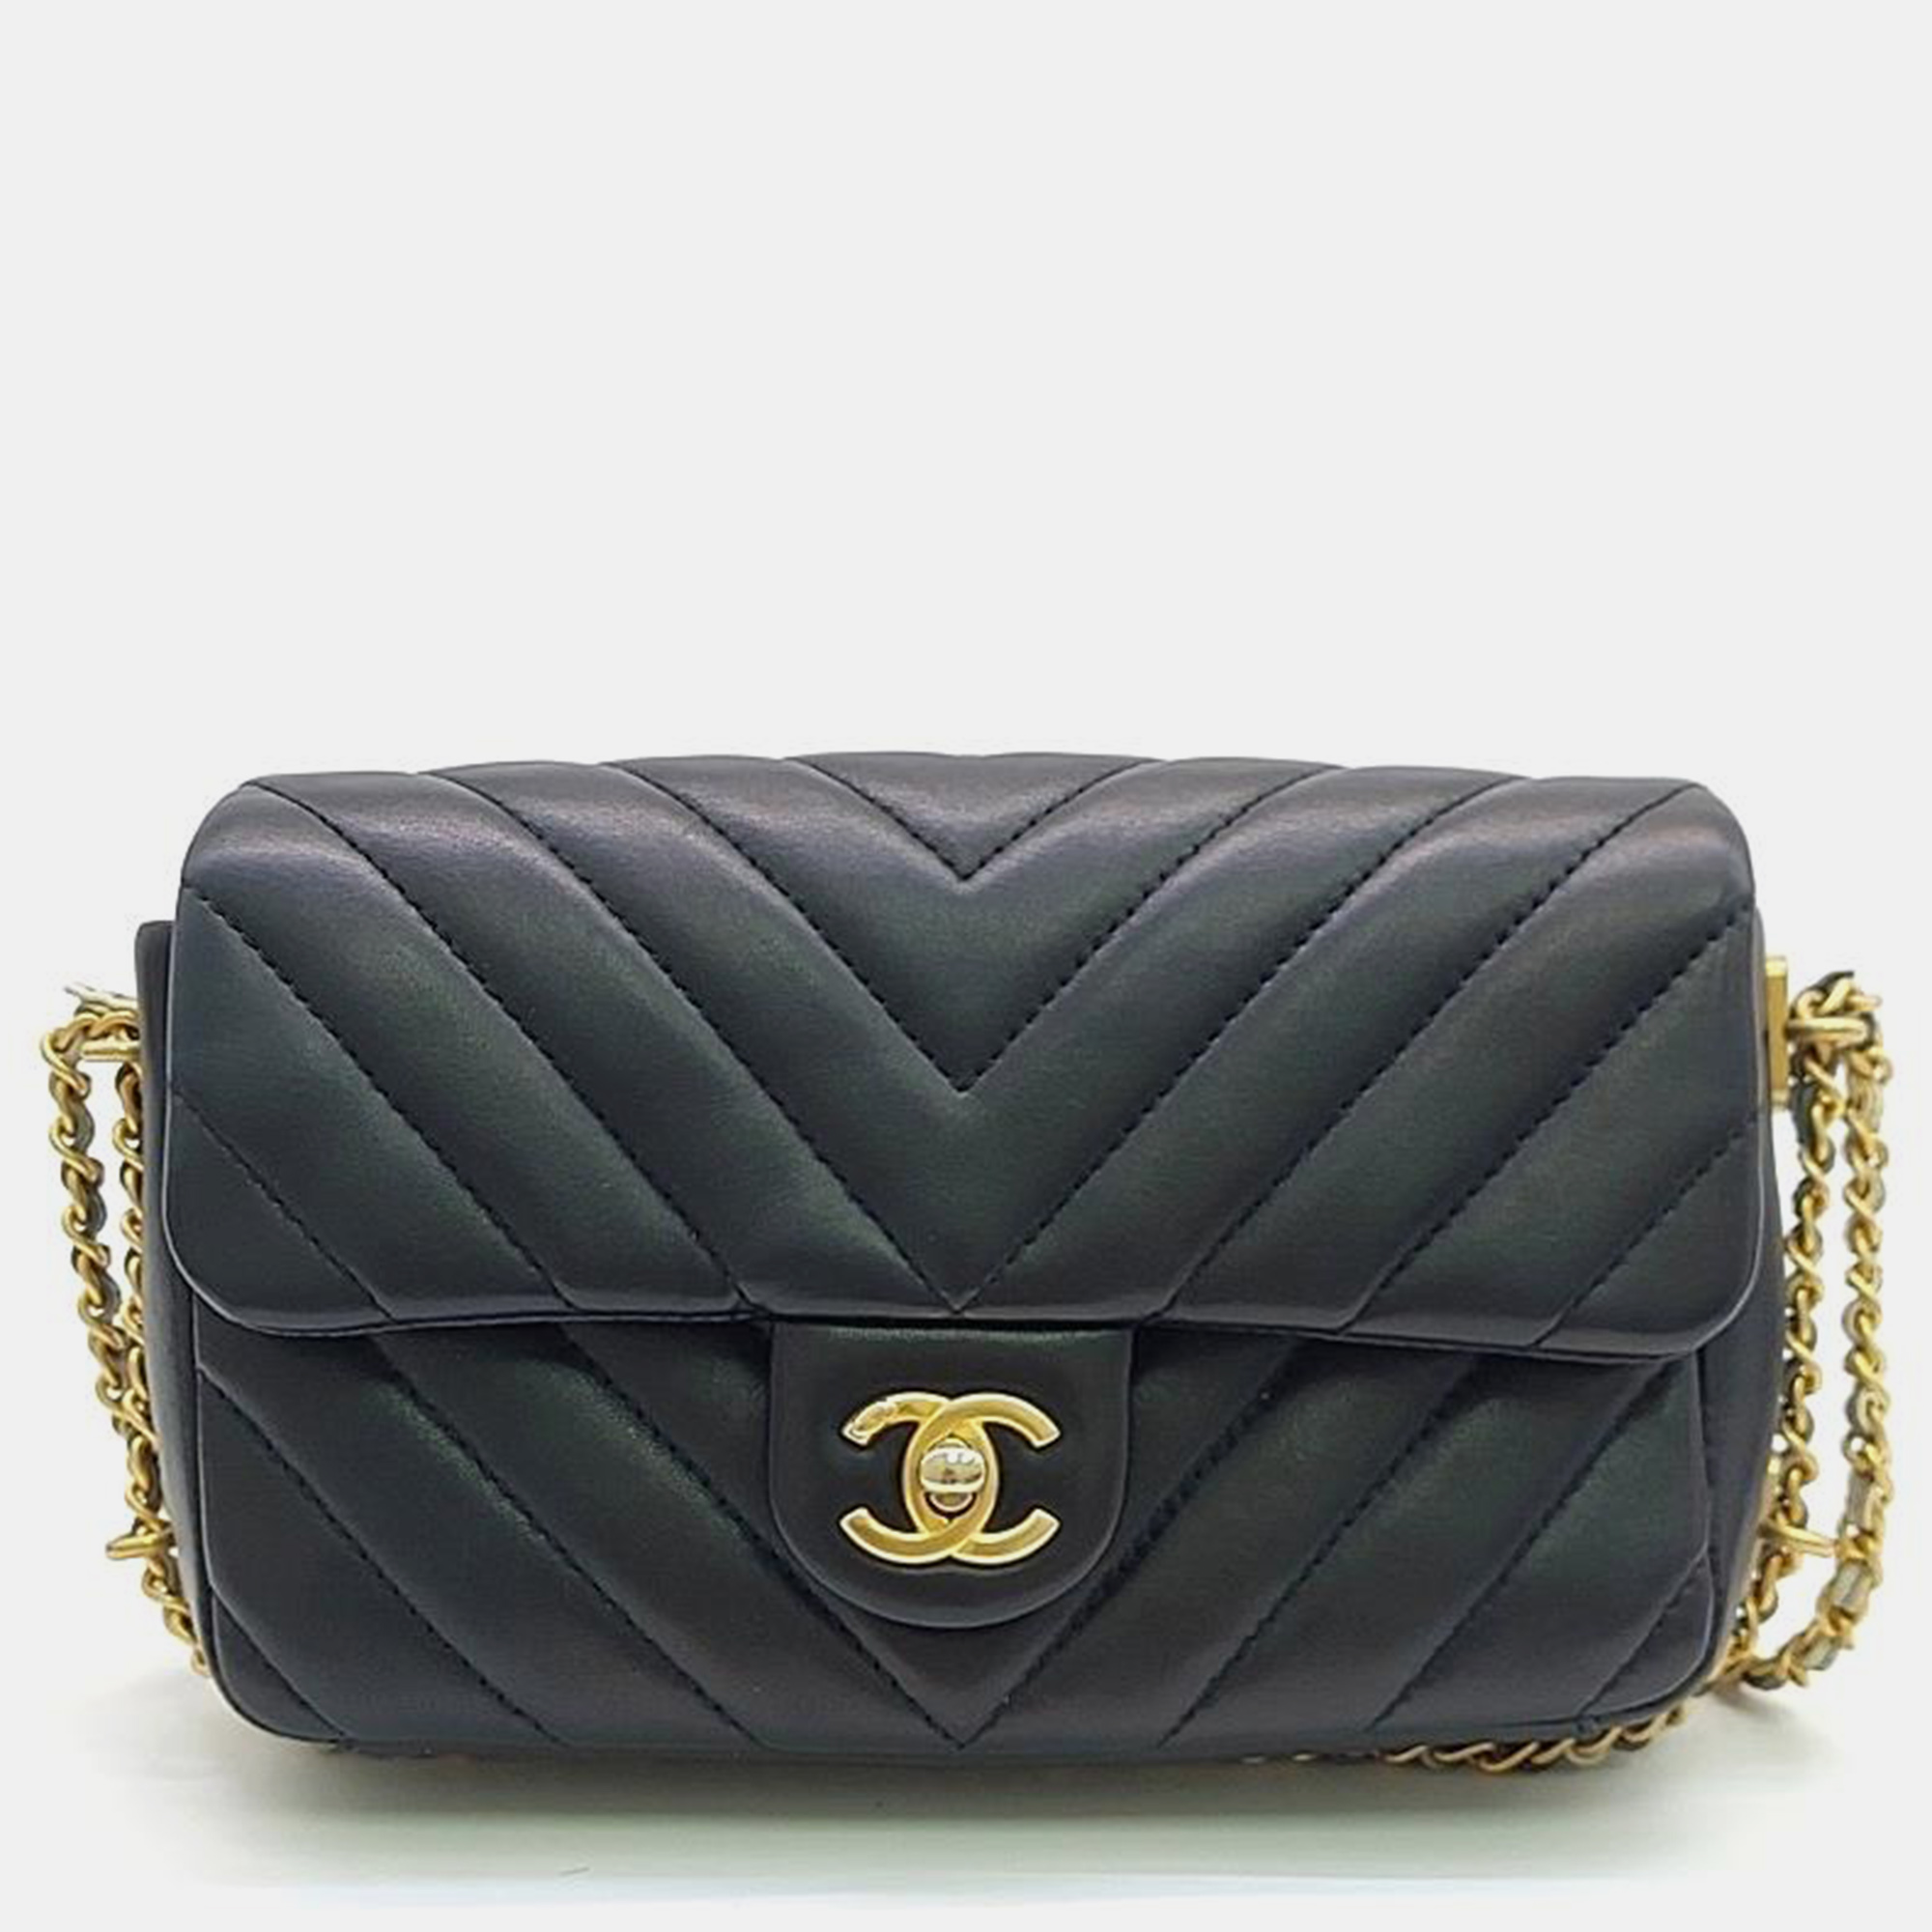 Chanel black chevron leather mini flap bag